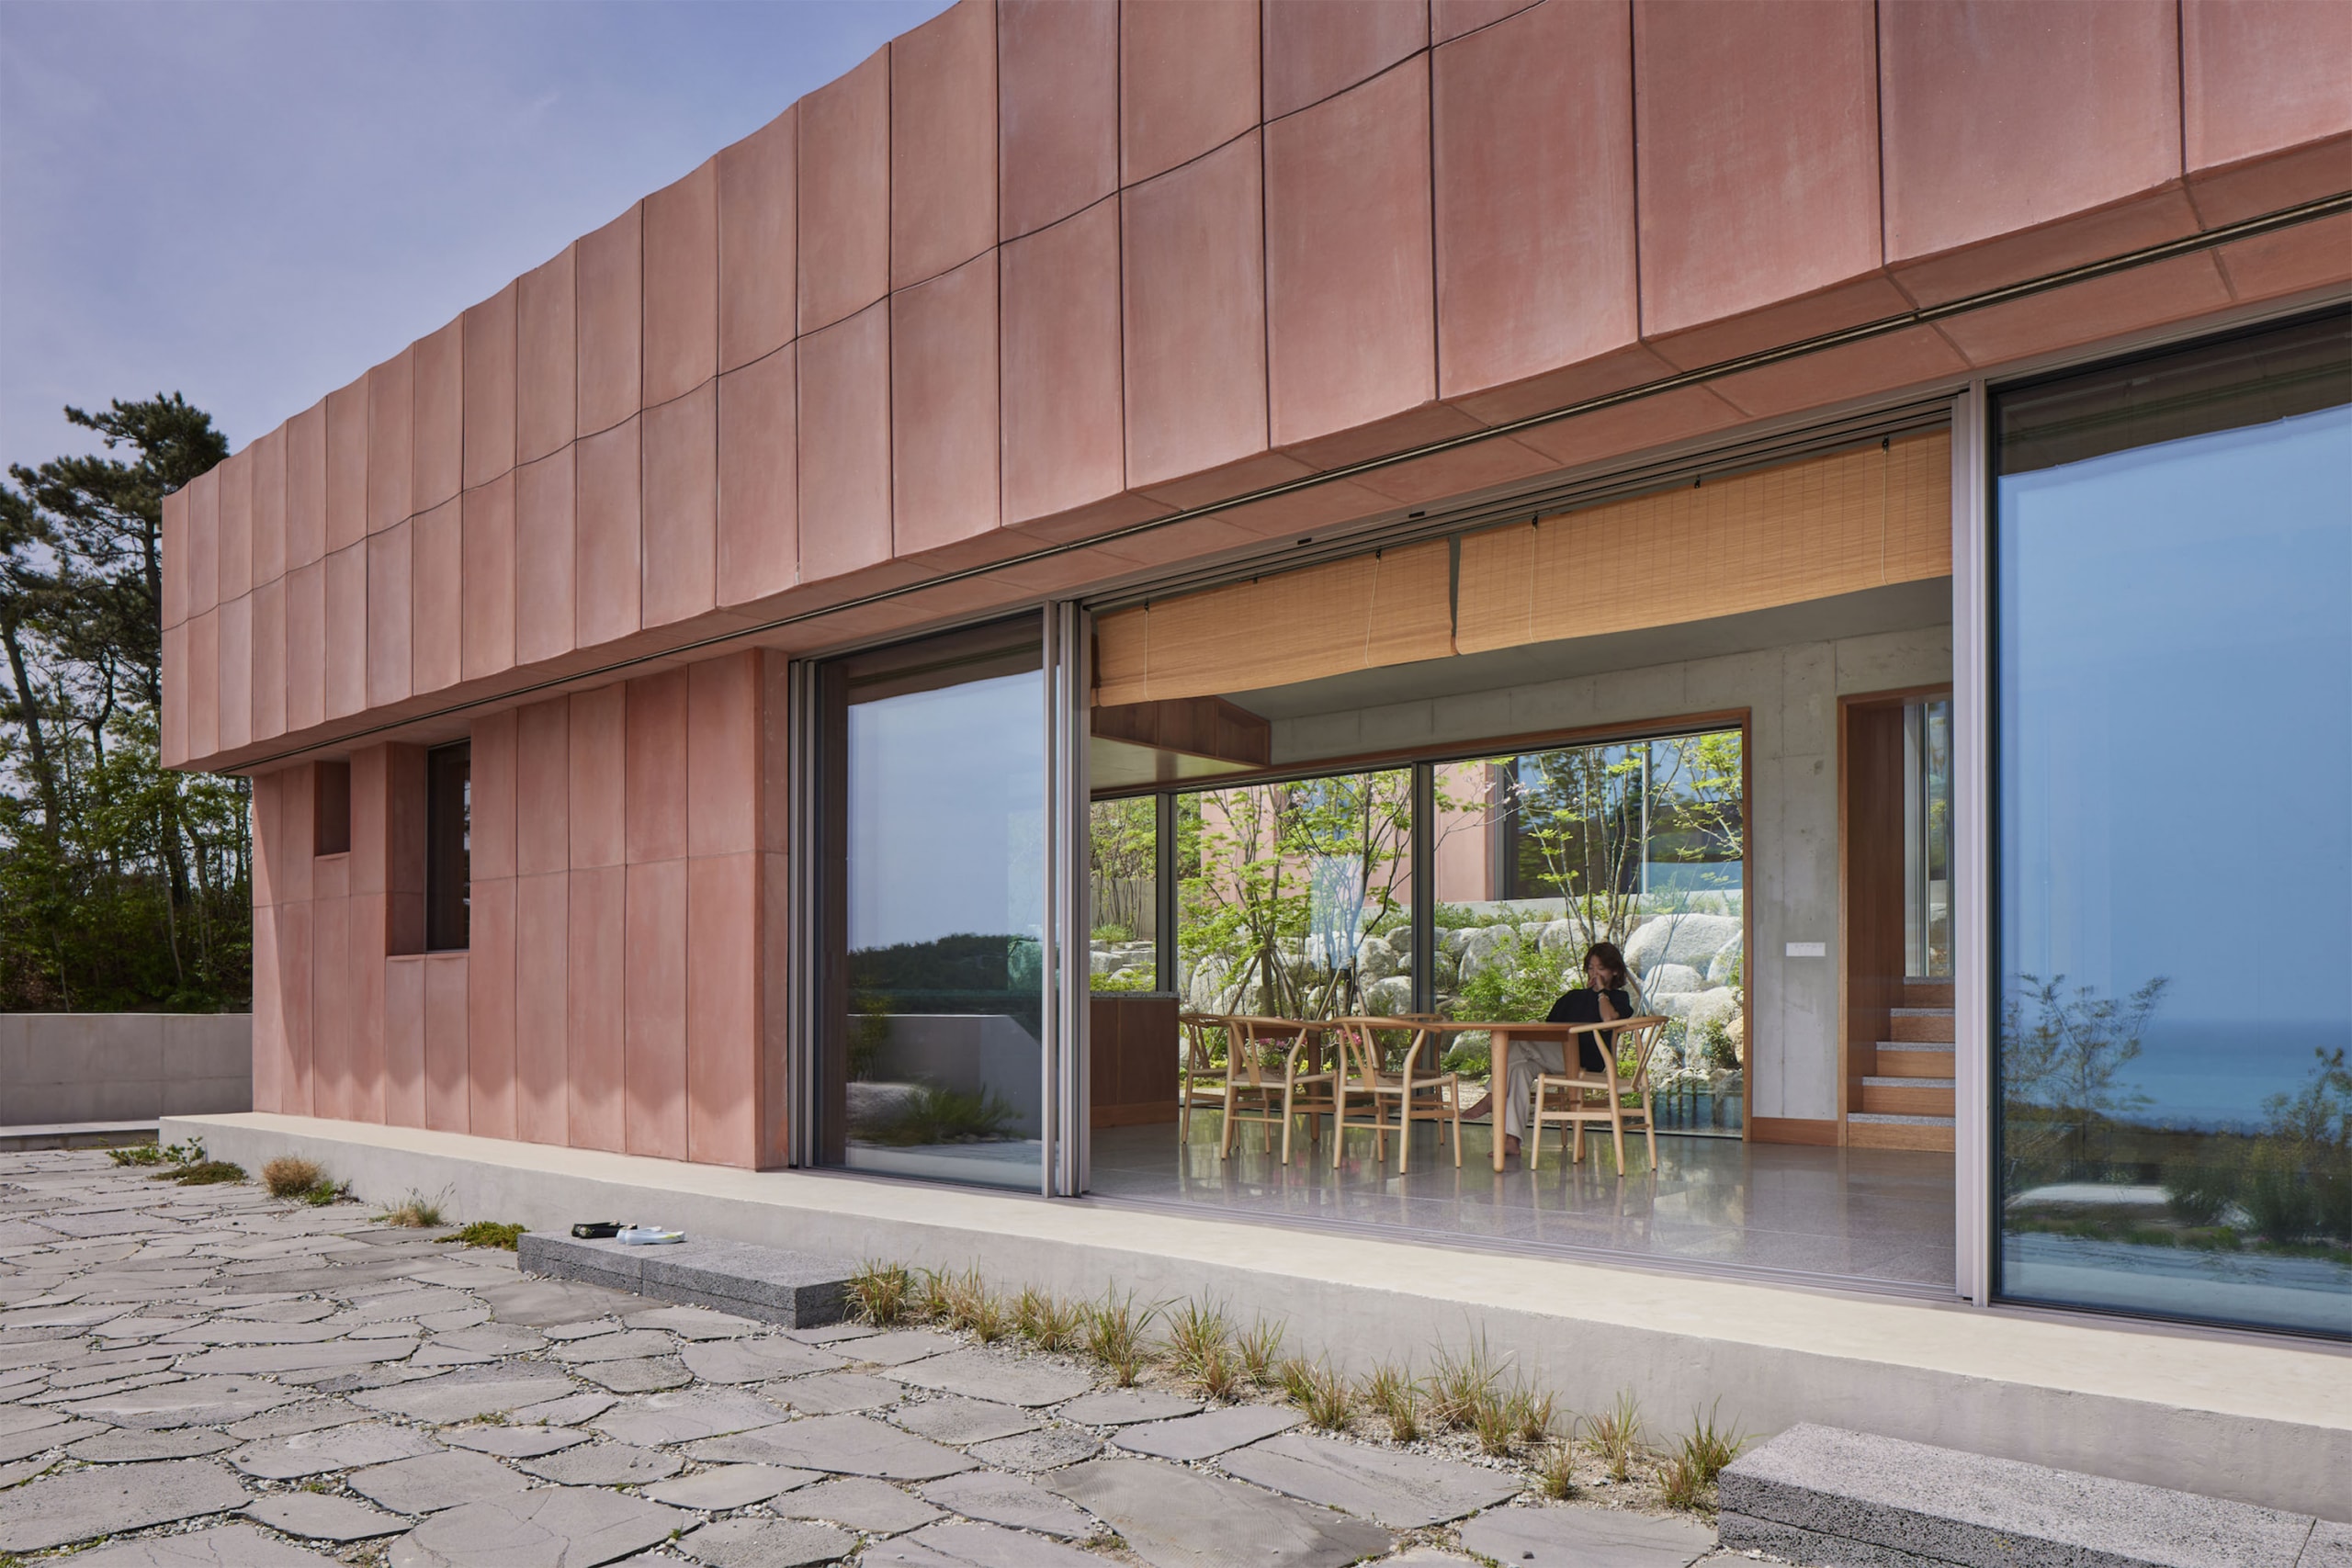 Studio Weave Seosaeng House South Korea Info Architecture Design 